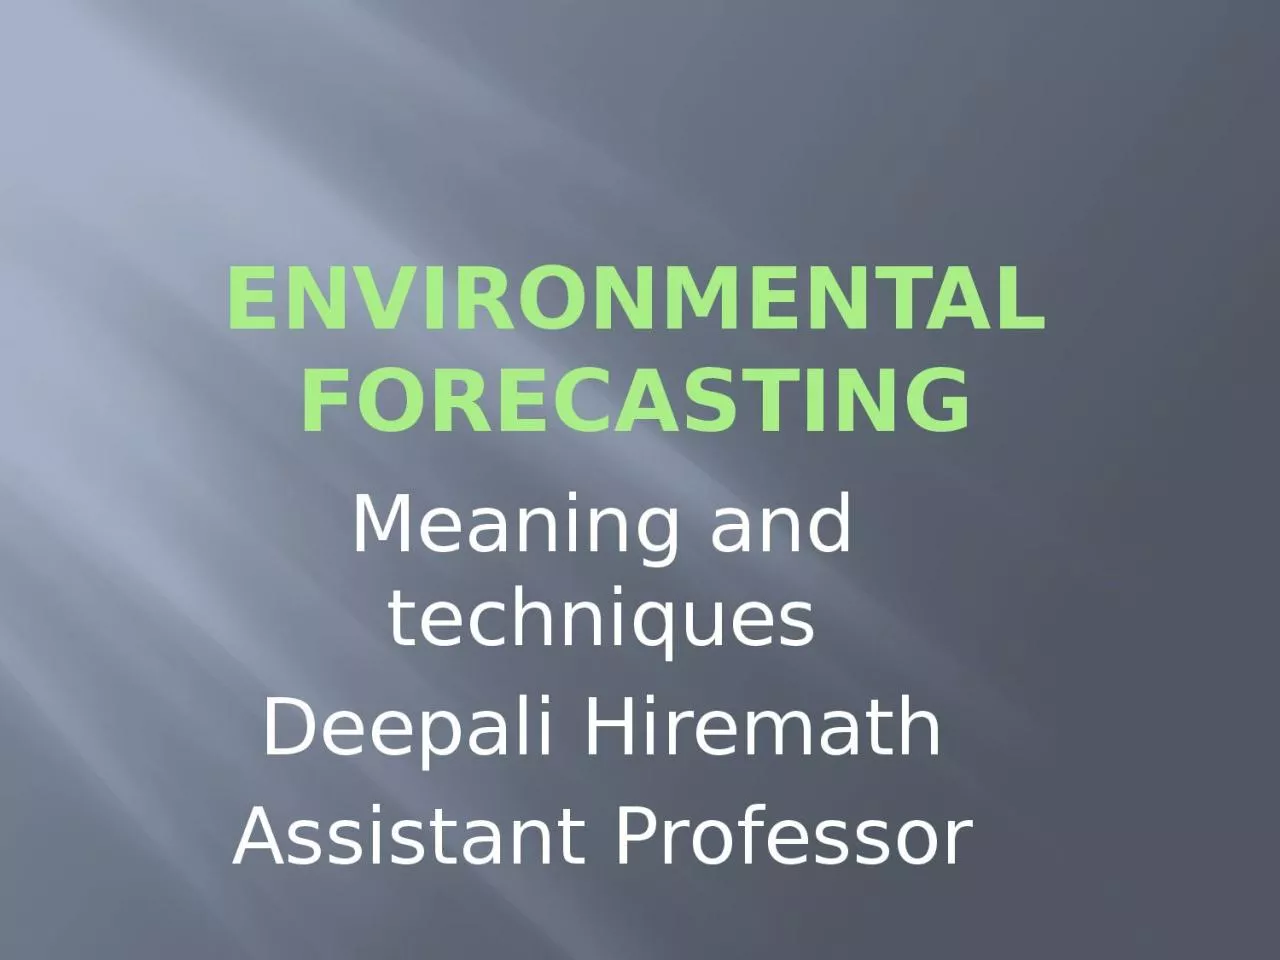 Environmental forecasting